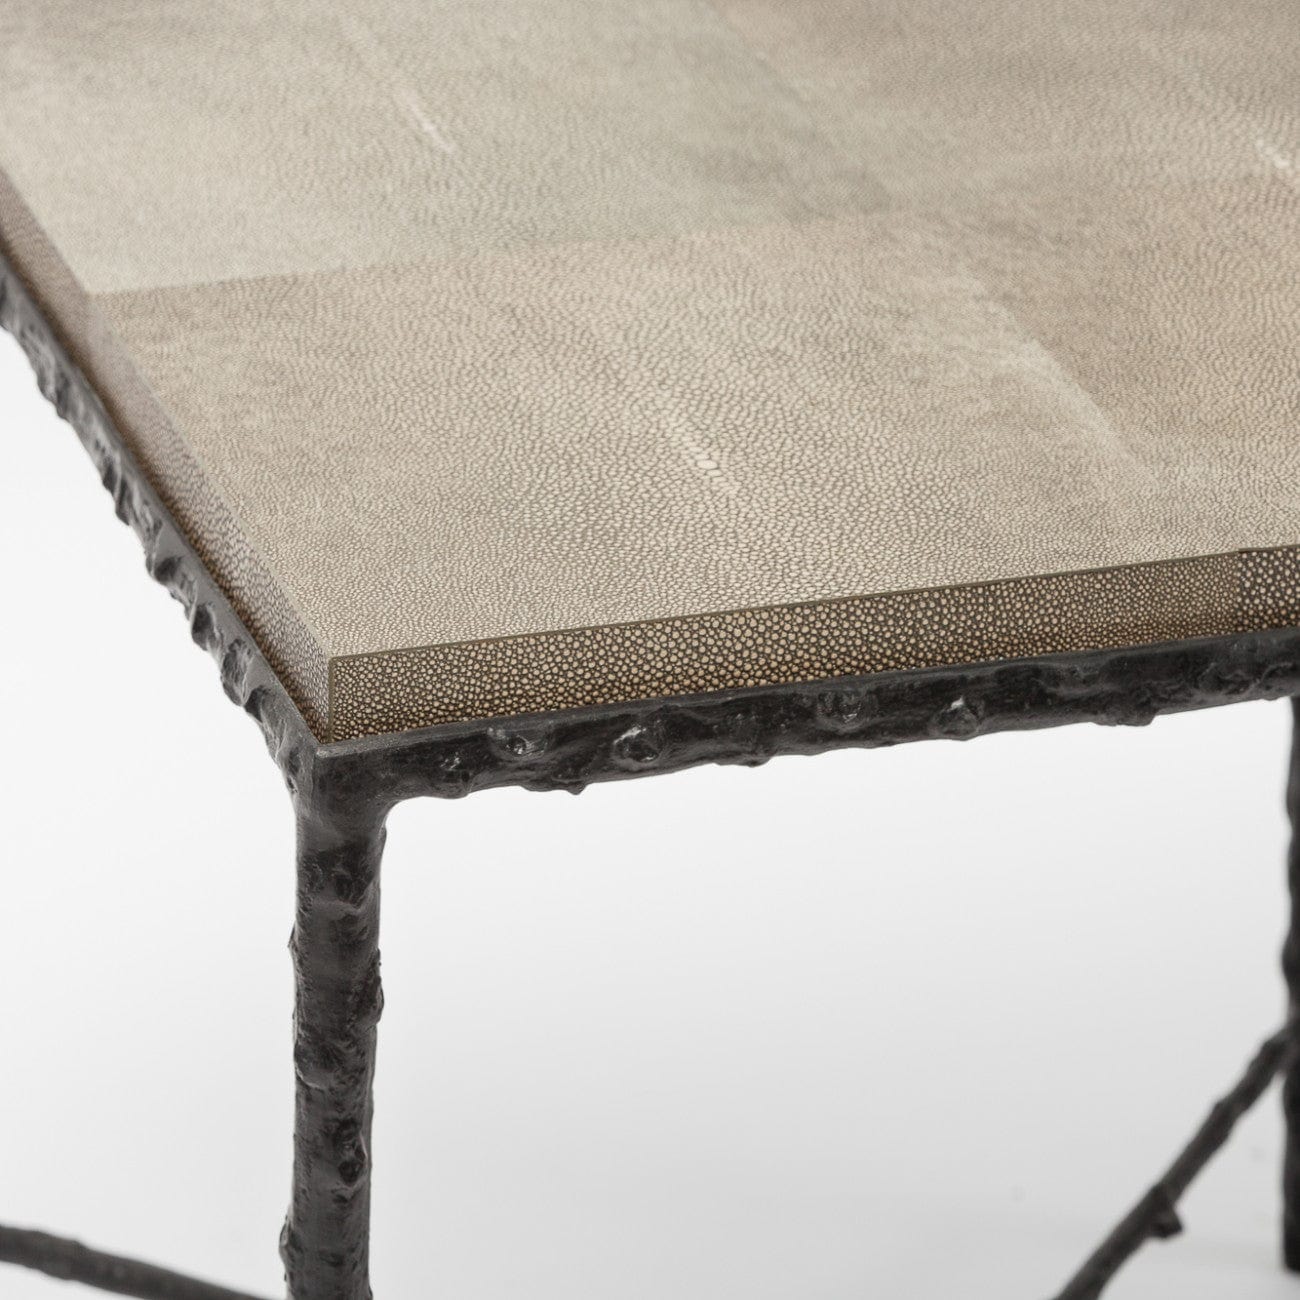 Eccotrading Design London Sleeping Arun Table Bronze Shimmer Shagreen Leather House of Isabella UK